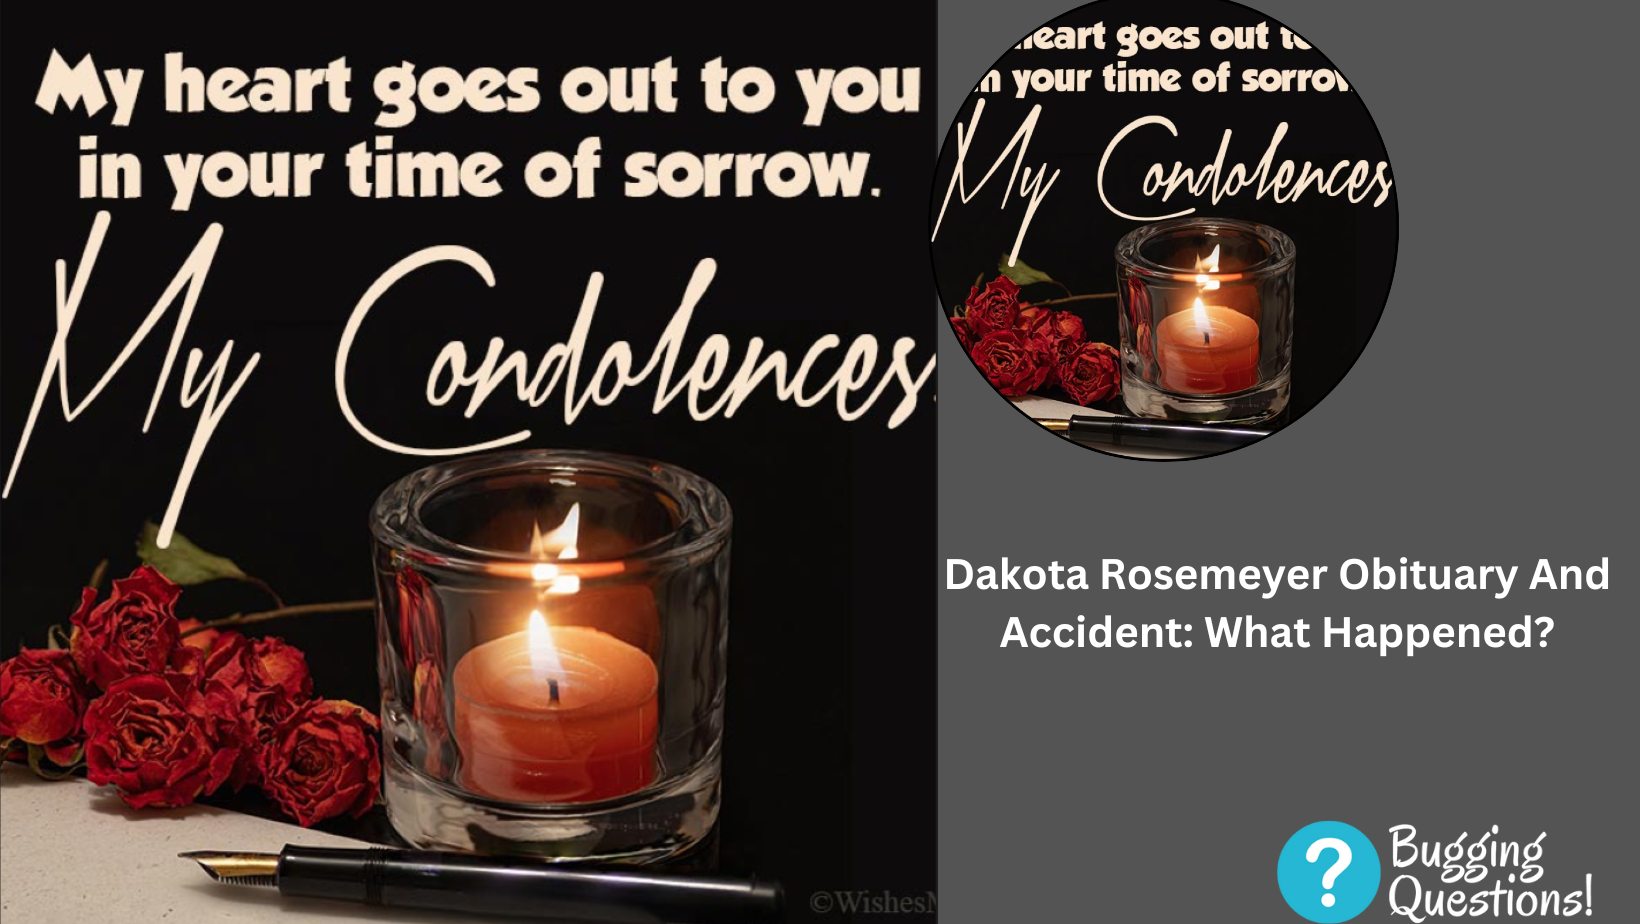 Dakota Rosemeyer Obituary And Accident: What Happened?